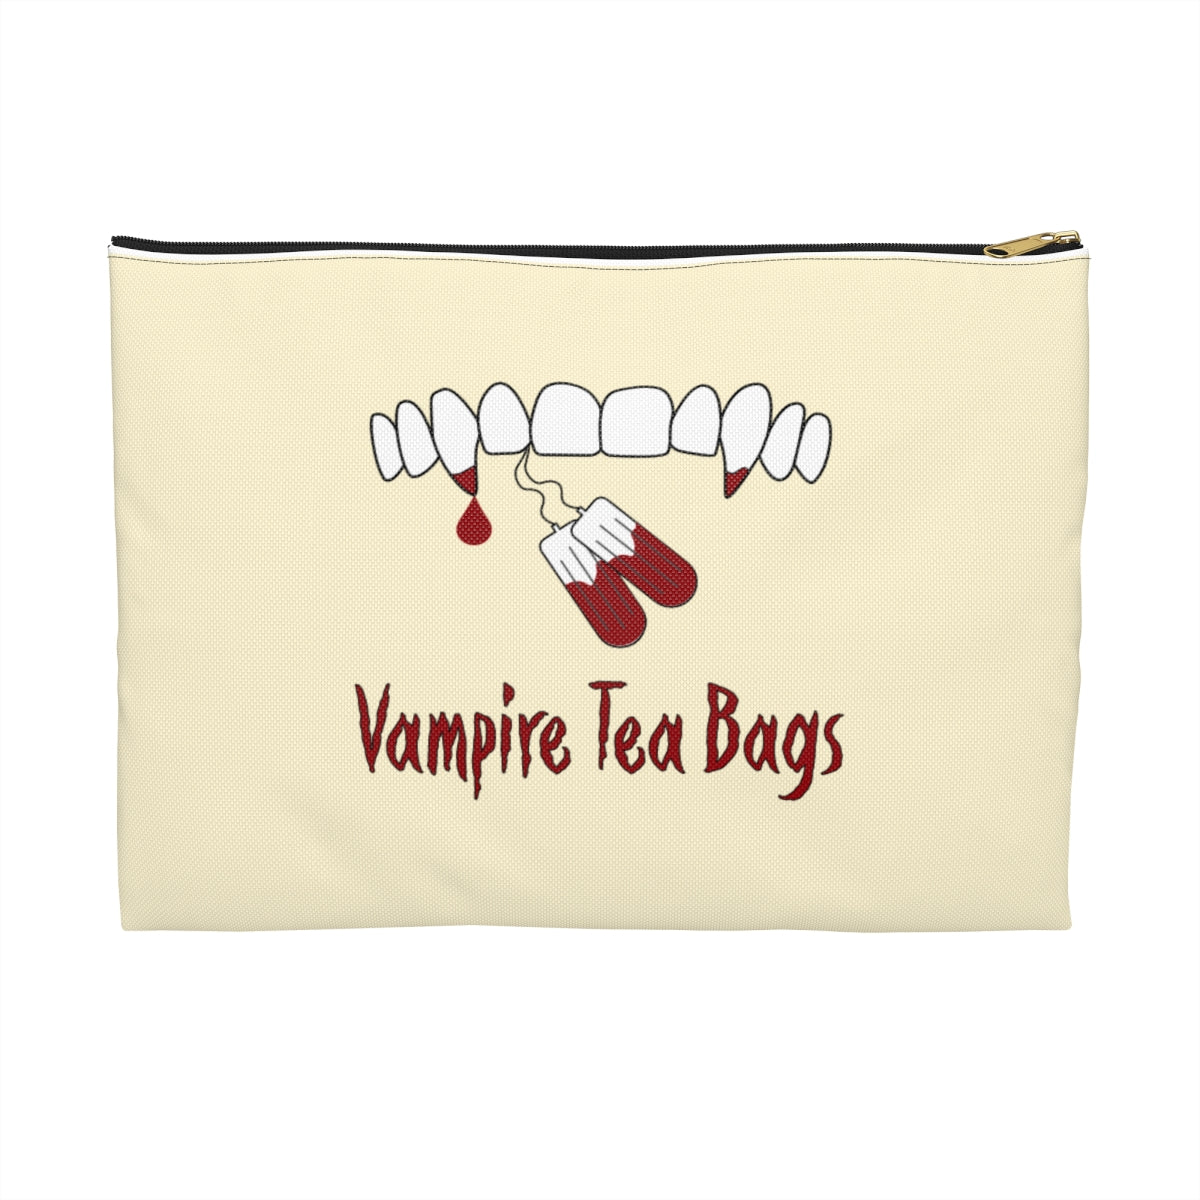 Vampire Tea Bags Accessory Bag